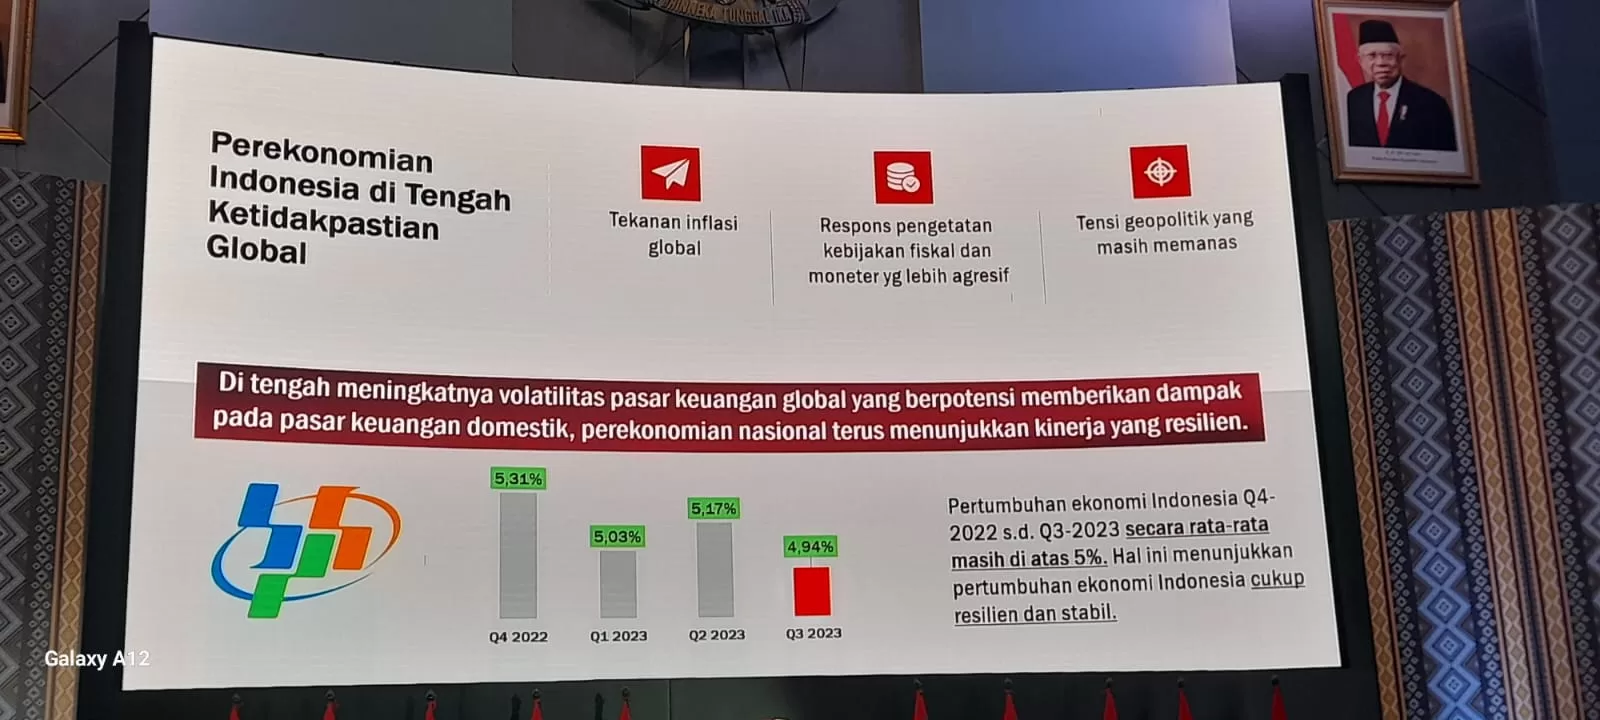 Bursa Efek Indonesia